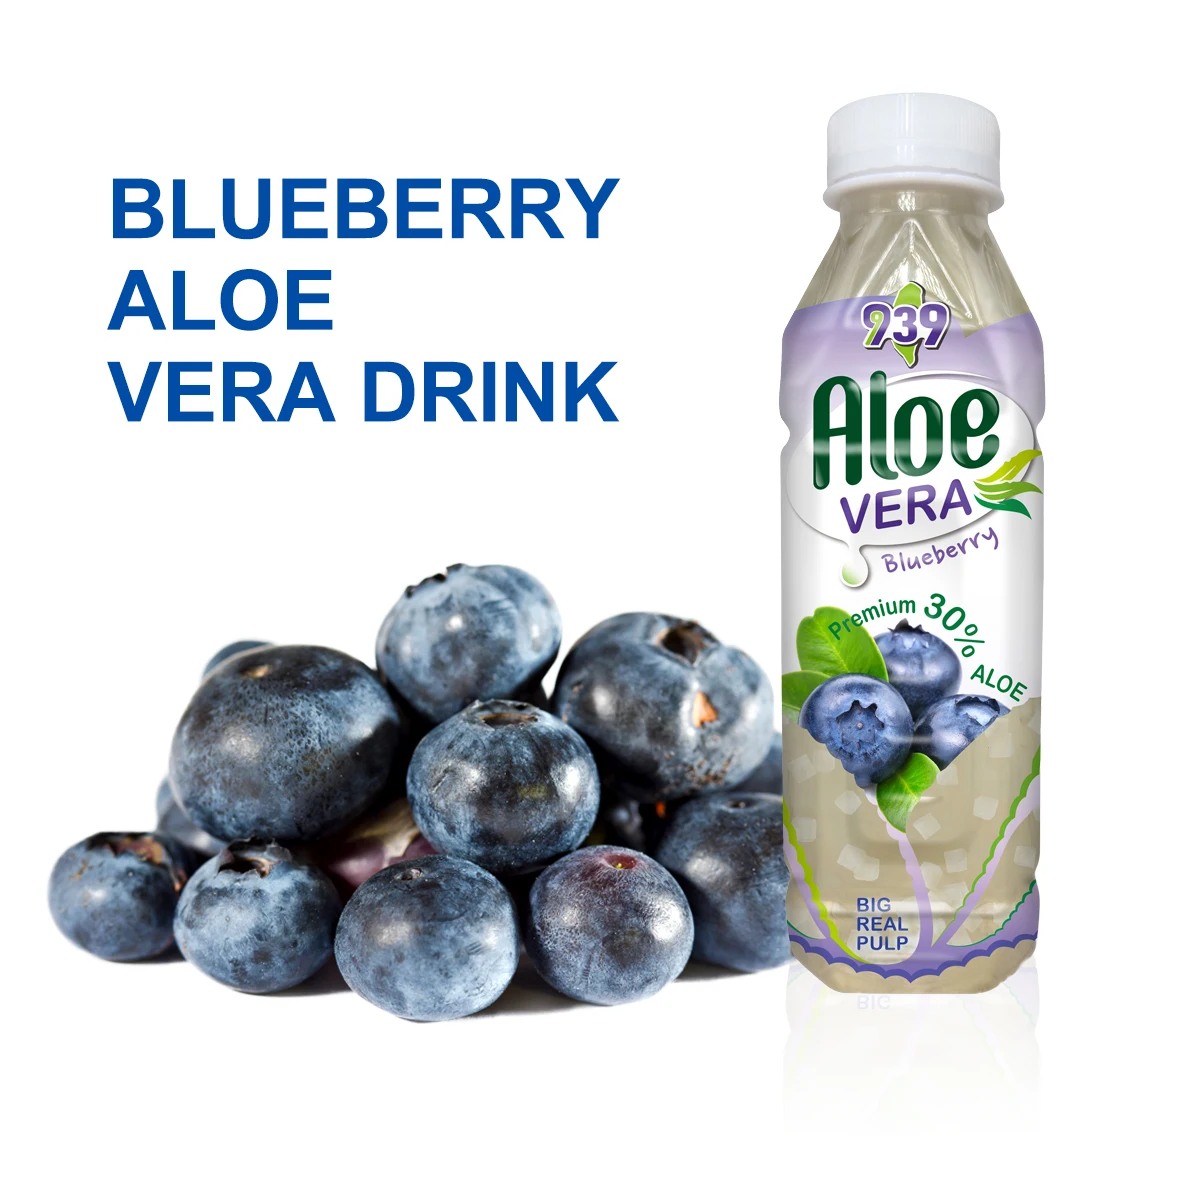 Aloe Vera Drink Original with Real Pulp Grape Juice added Beverage Product Development